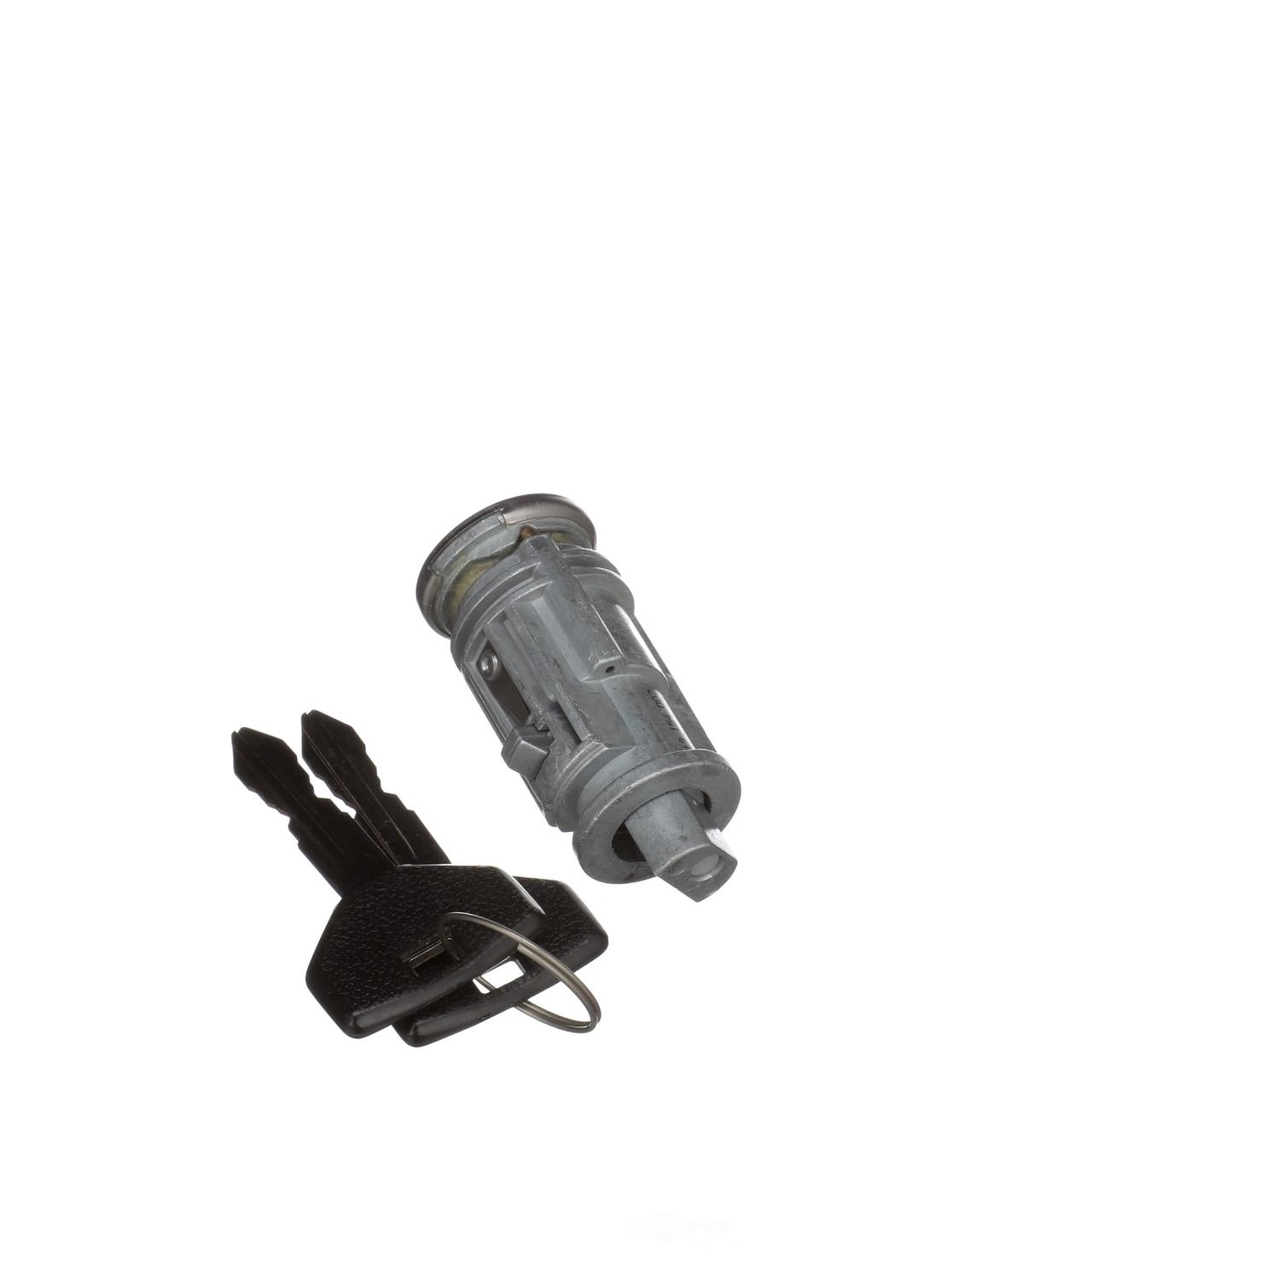 2003 Jeep Wrangler Ignition Lock Cylinder - Standard Motor Products US-427L